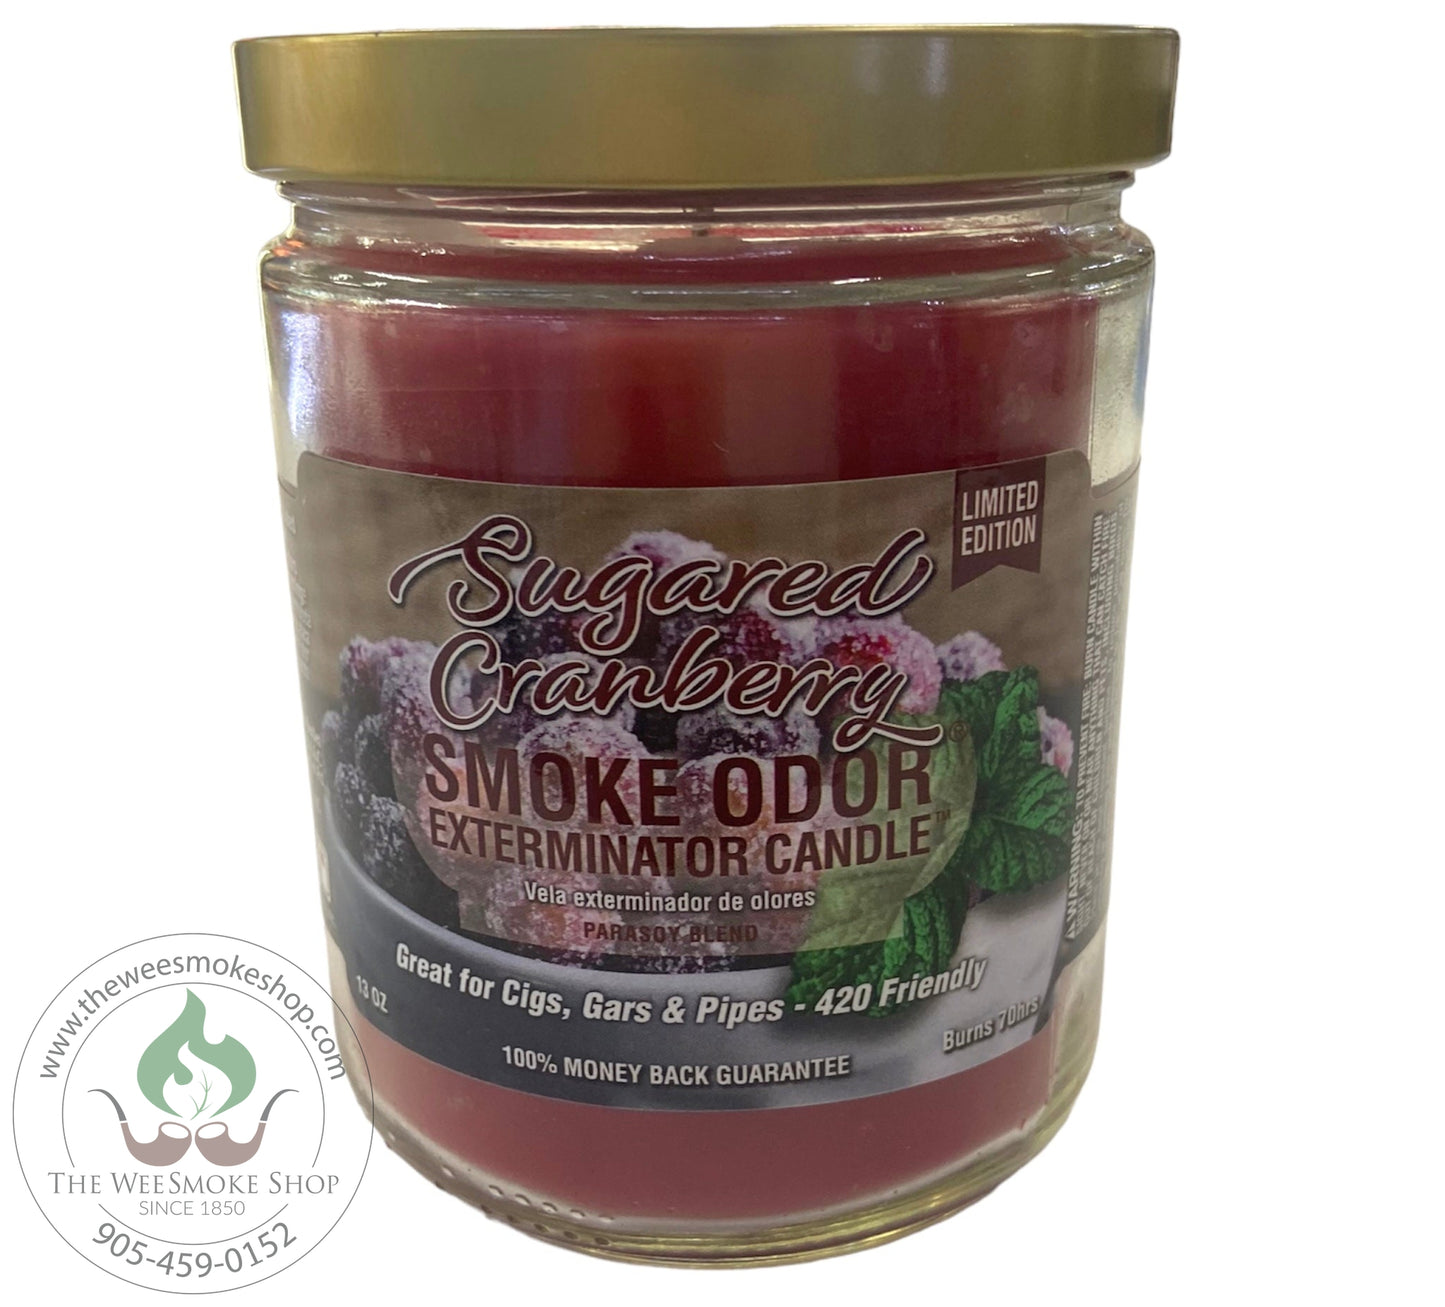 Sugared Cranberry Smoke Odor Exterminator Candle-The Wee Smoke Shop